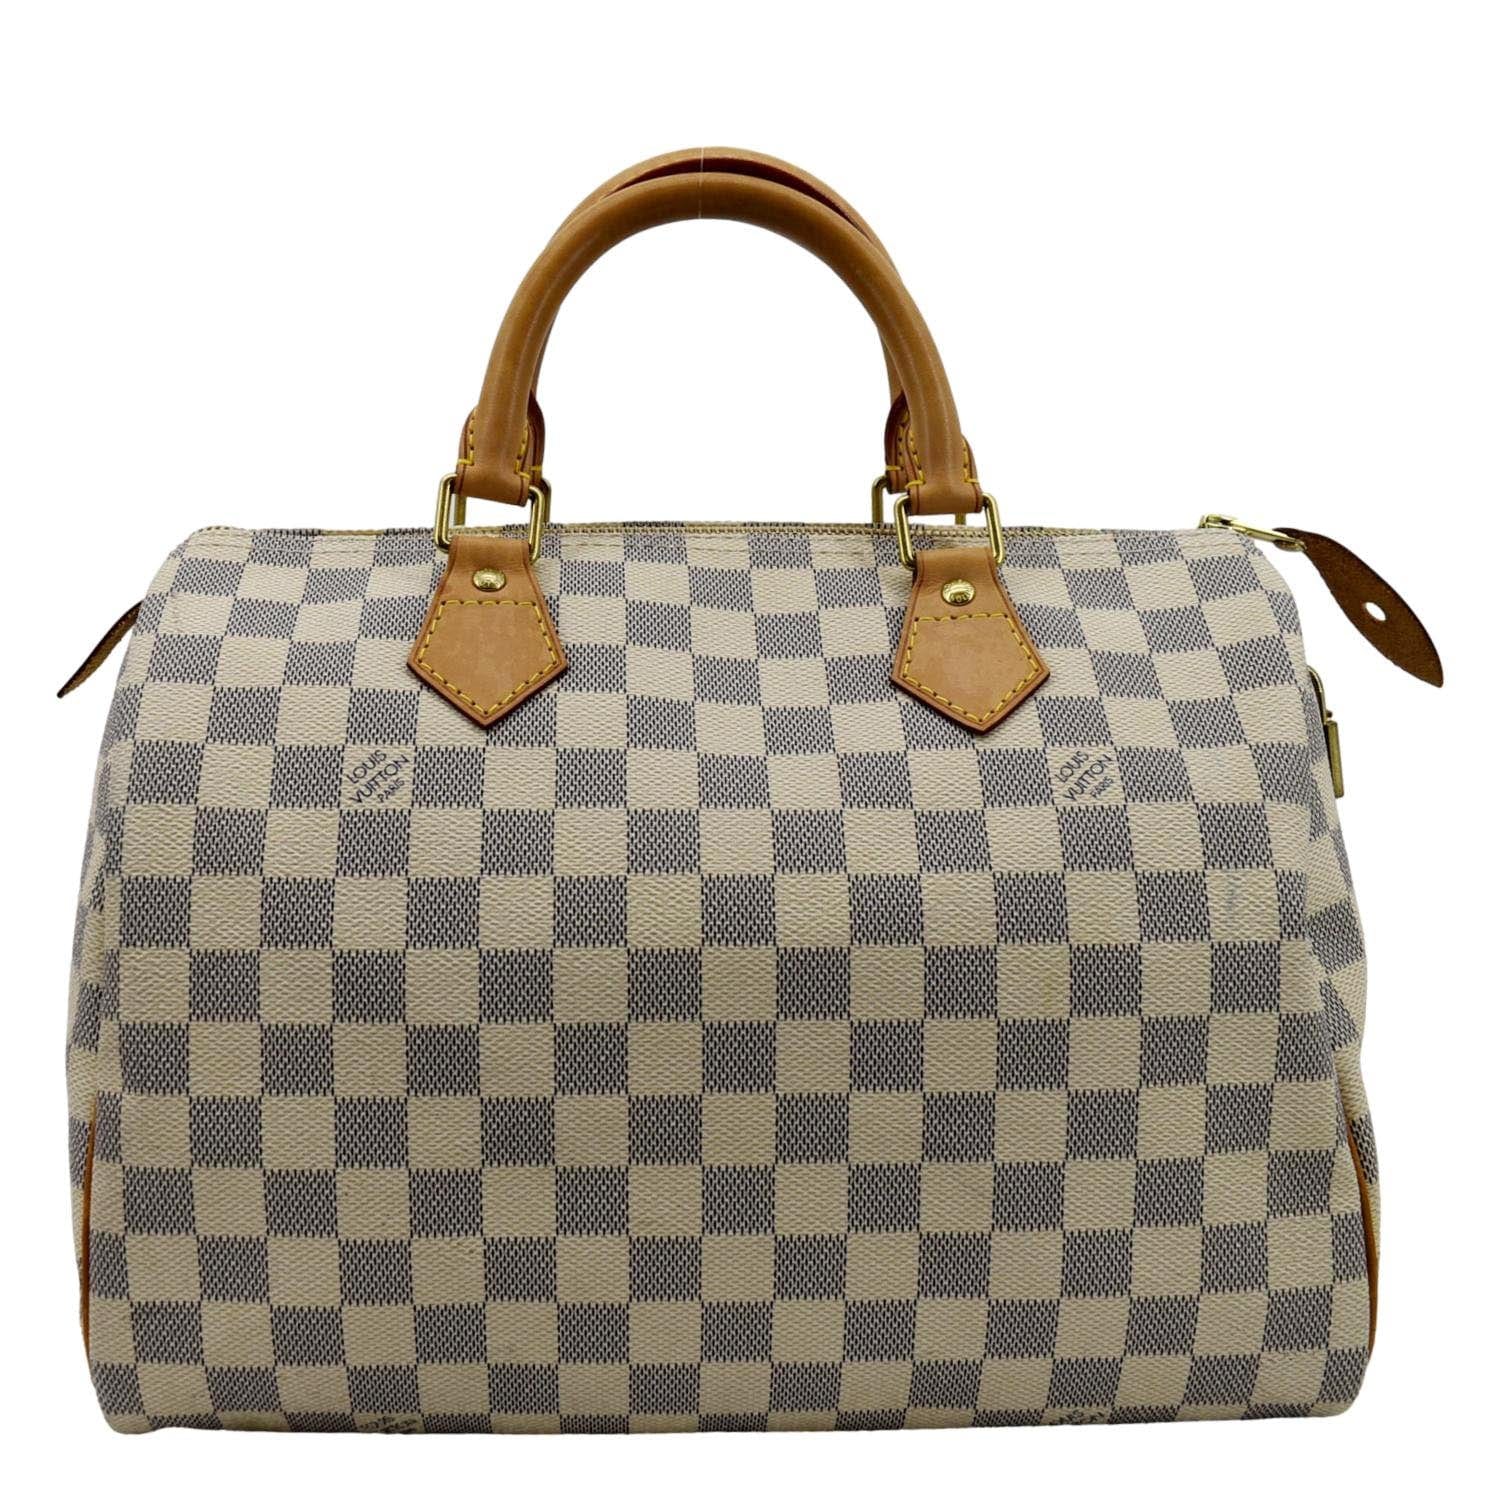 Speedy 30 in damier ebene  Louis vuitton handbags, Women bags fashion,  Cold fashion